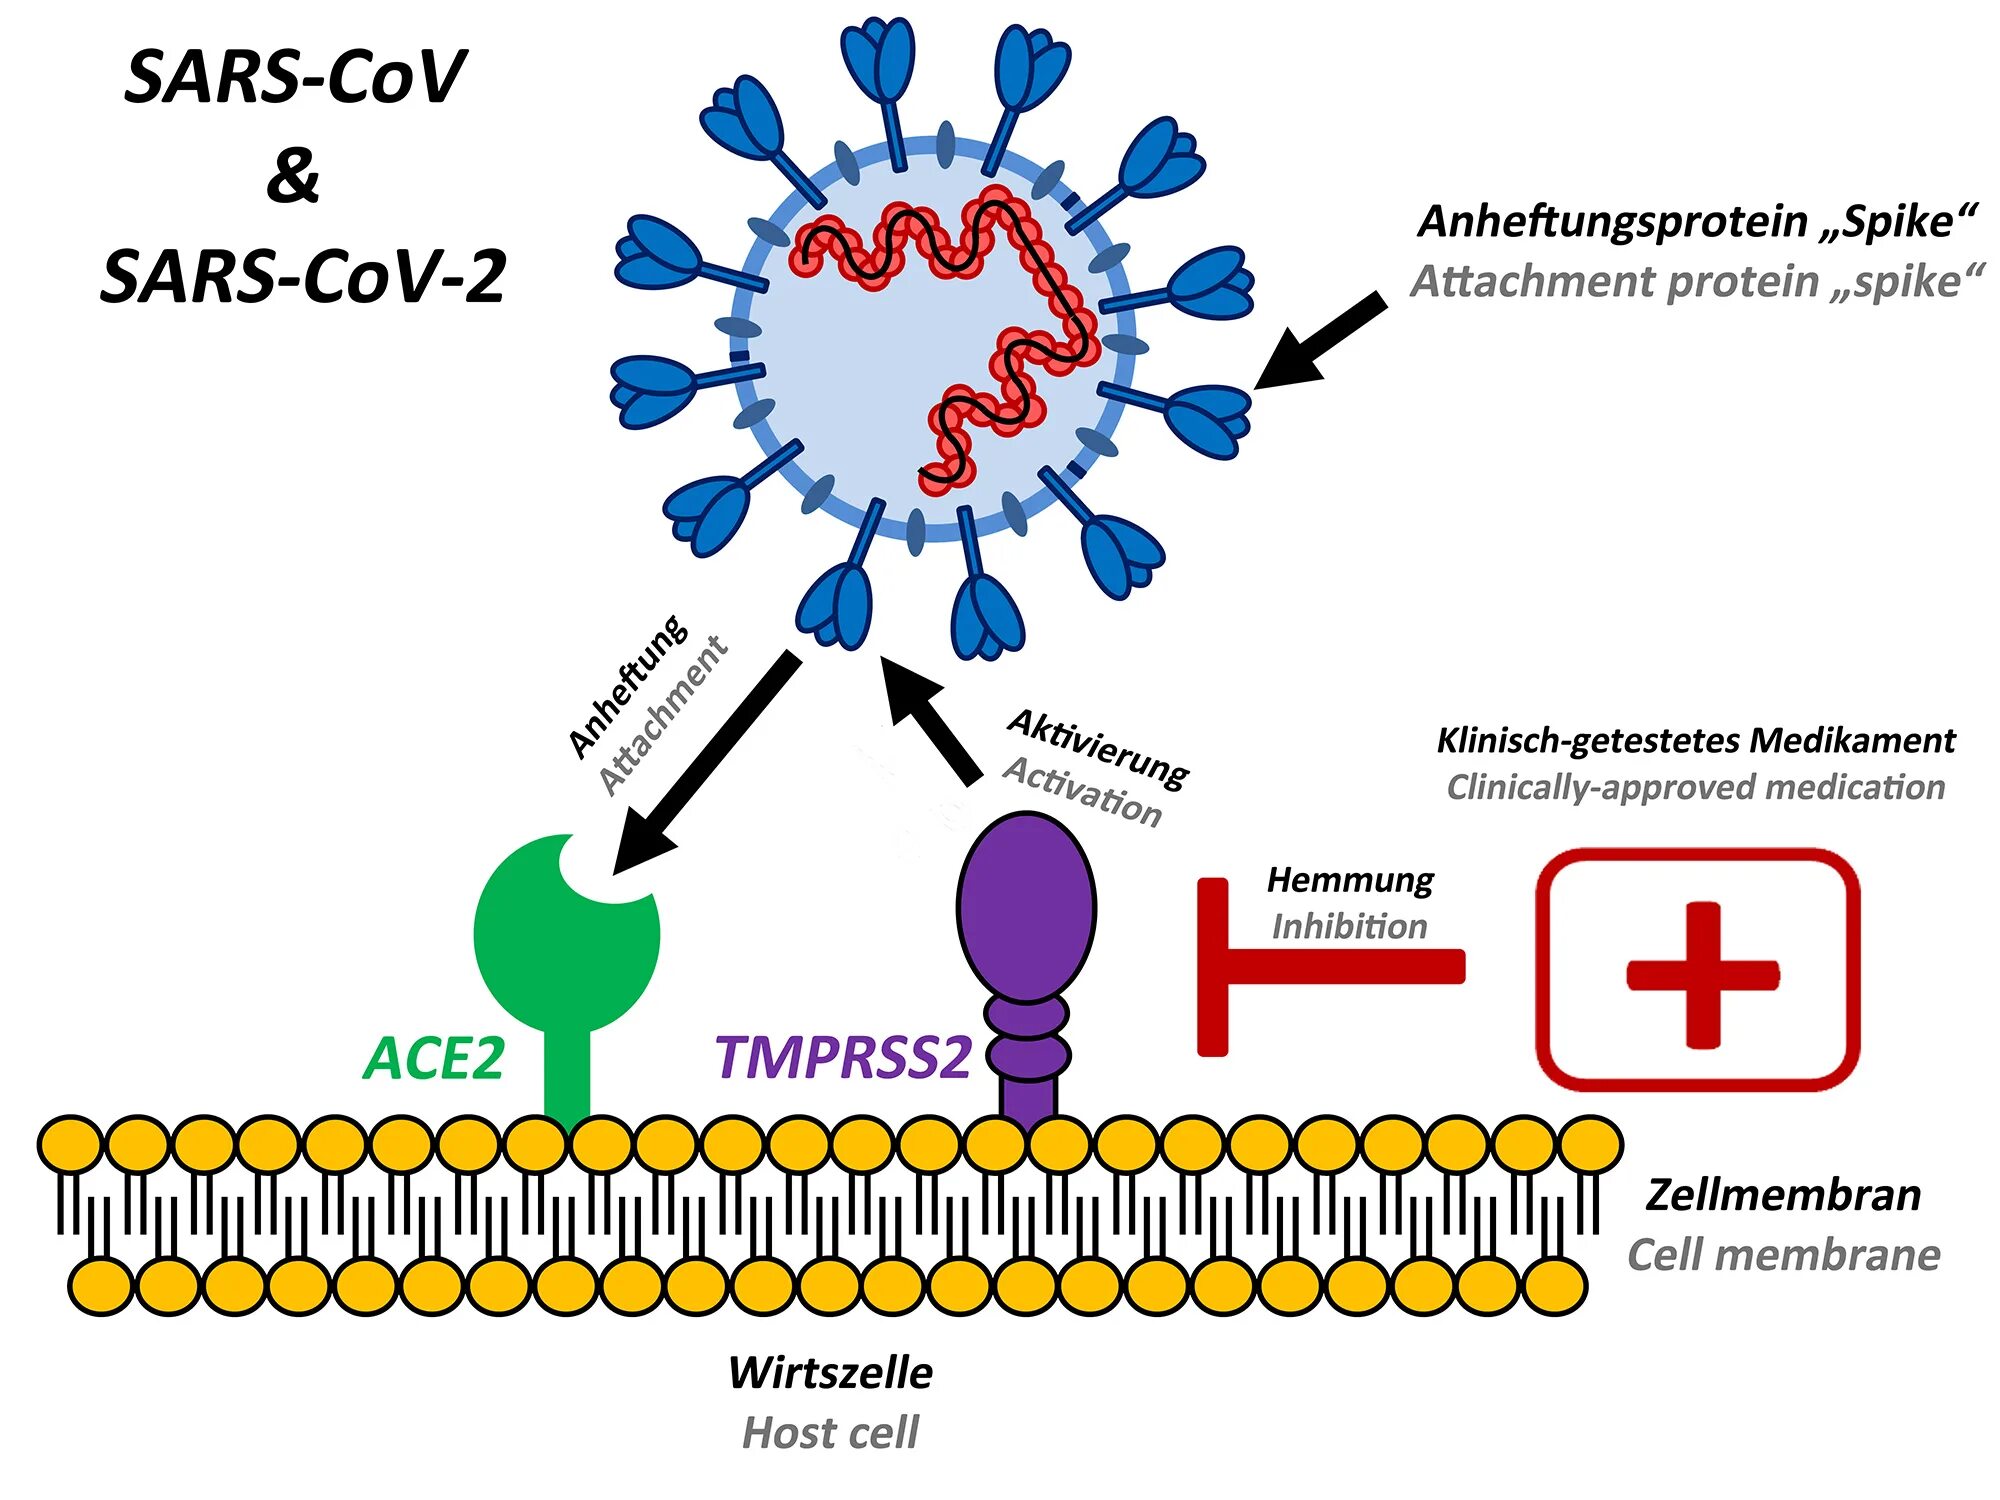 Ace 2 Рецептор коронавирус. Коронавирус строение Covid 19. Рецепторы клеток для SARS-cov-2. Строение вируса SARS-cov-2. Новый тип коронавируса